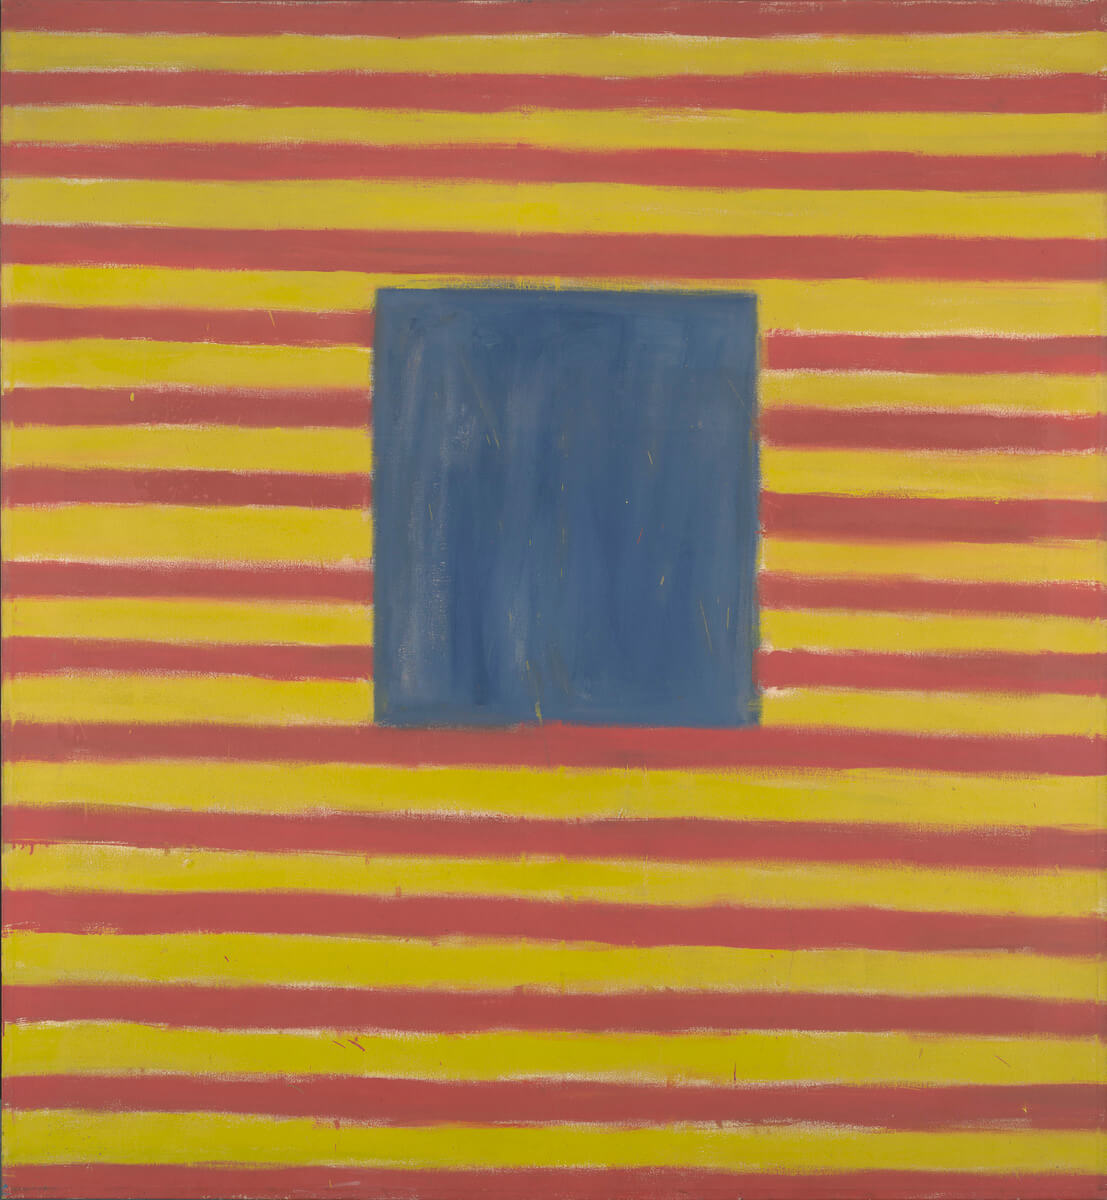 Frank Stella (American, born 1936). Coney Island, 1958. Oil on canvas, 85 ¼ x 78 7/8 in. (216.5 x 200.3 cm). Yale University Art Gallery, New Haven, Connecticut; Gift of Larom B. Munson, B.A., 1951, 1971.38. © 2013 Frank Stella/Artists Rights Society (ARS), New York